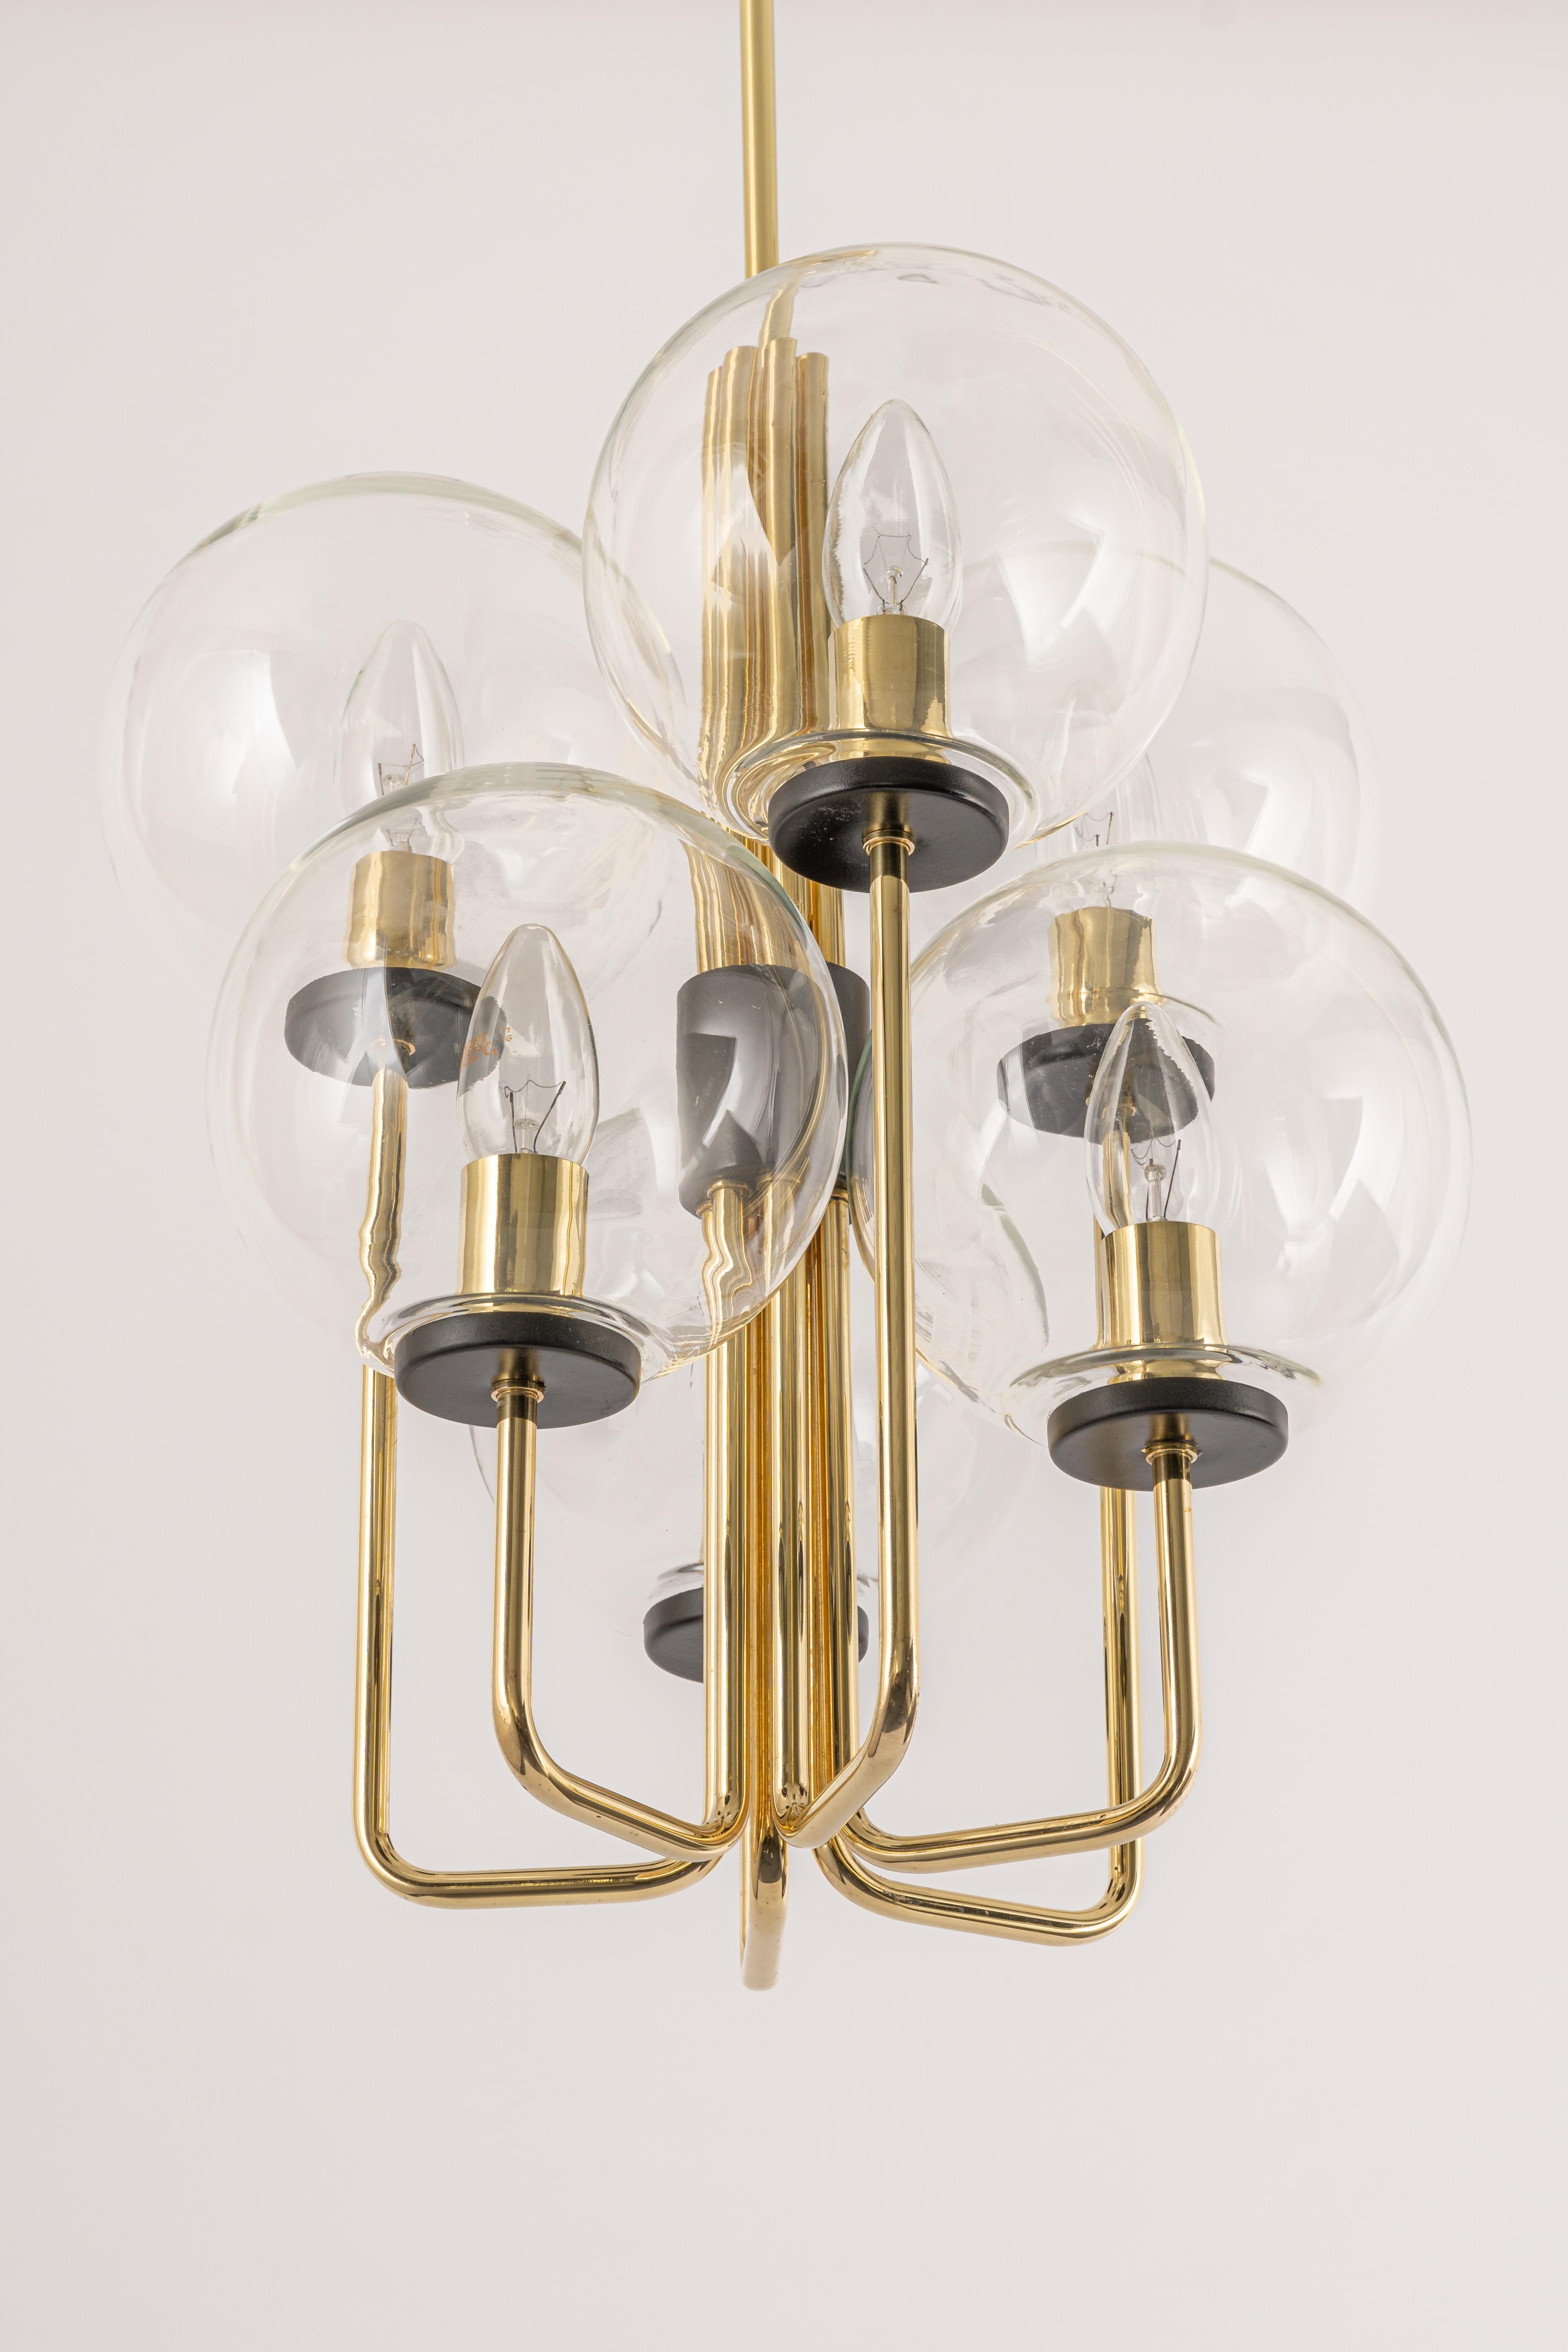 Stunning Petite Sciolari Style Brass Pendant Light, Germany, 1970s For Sale 1